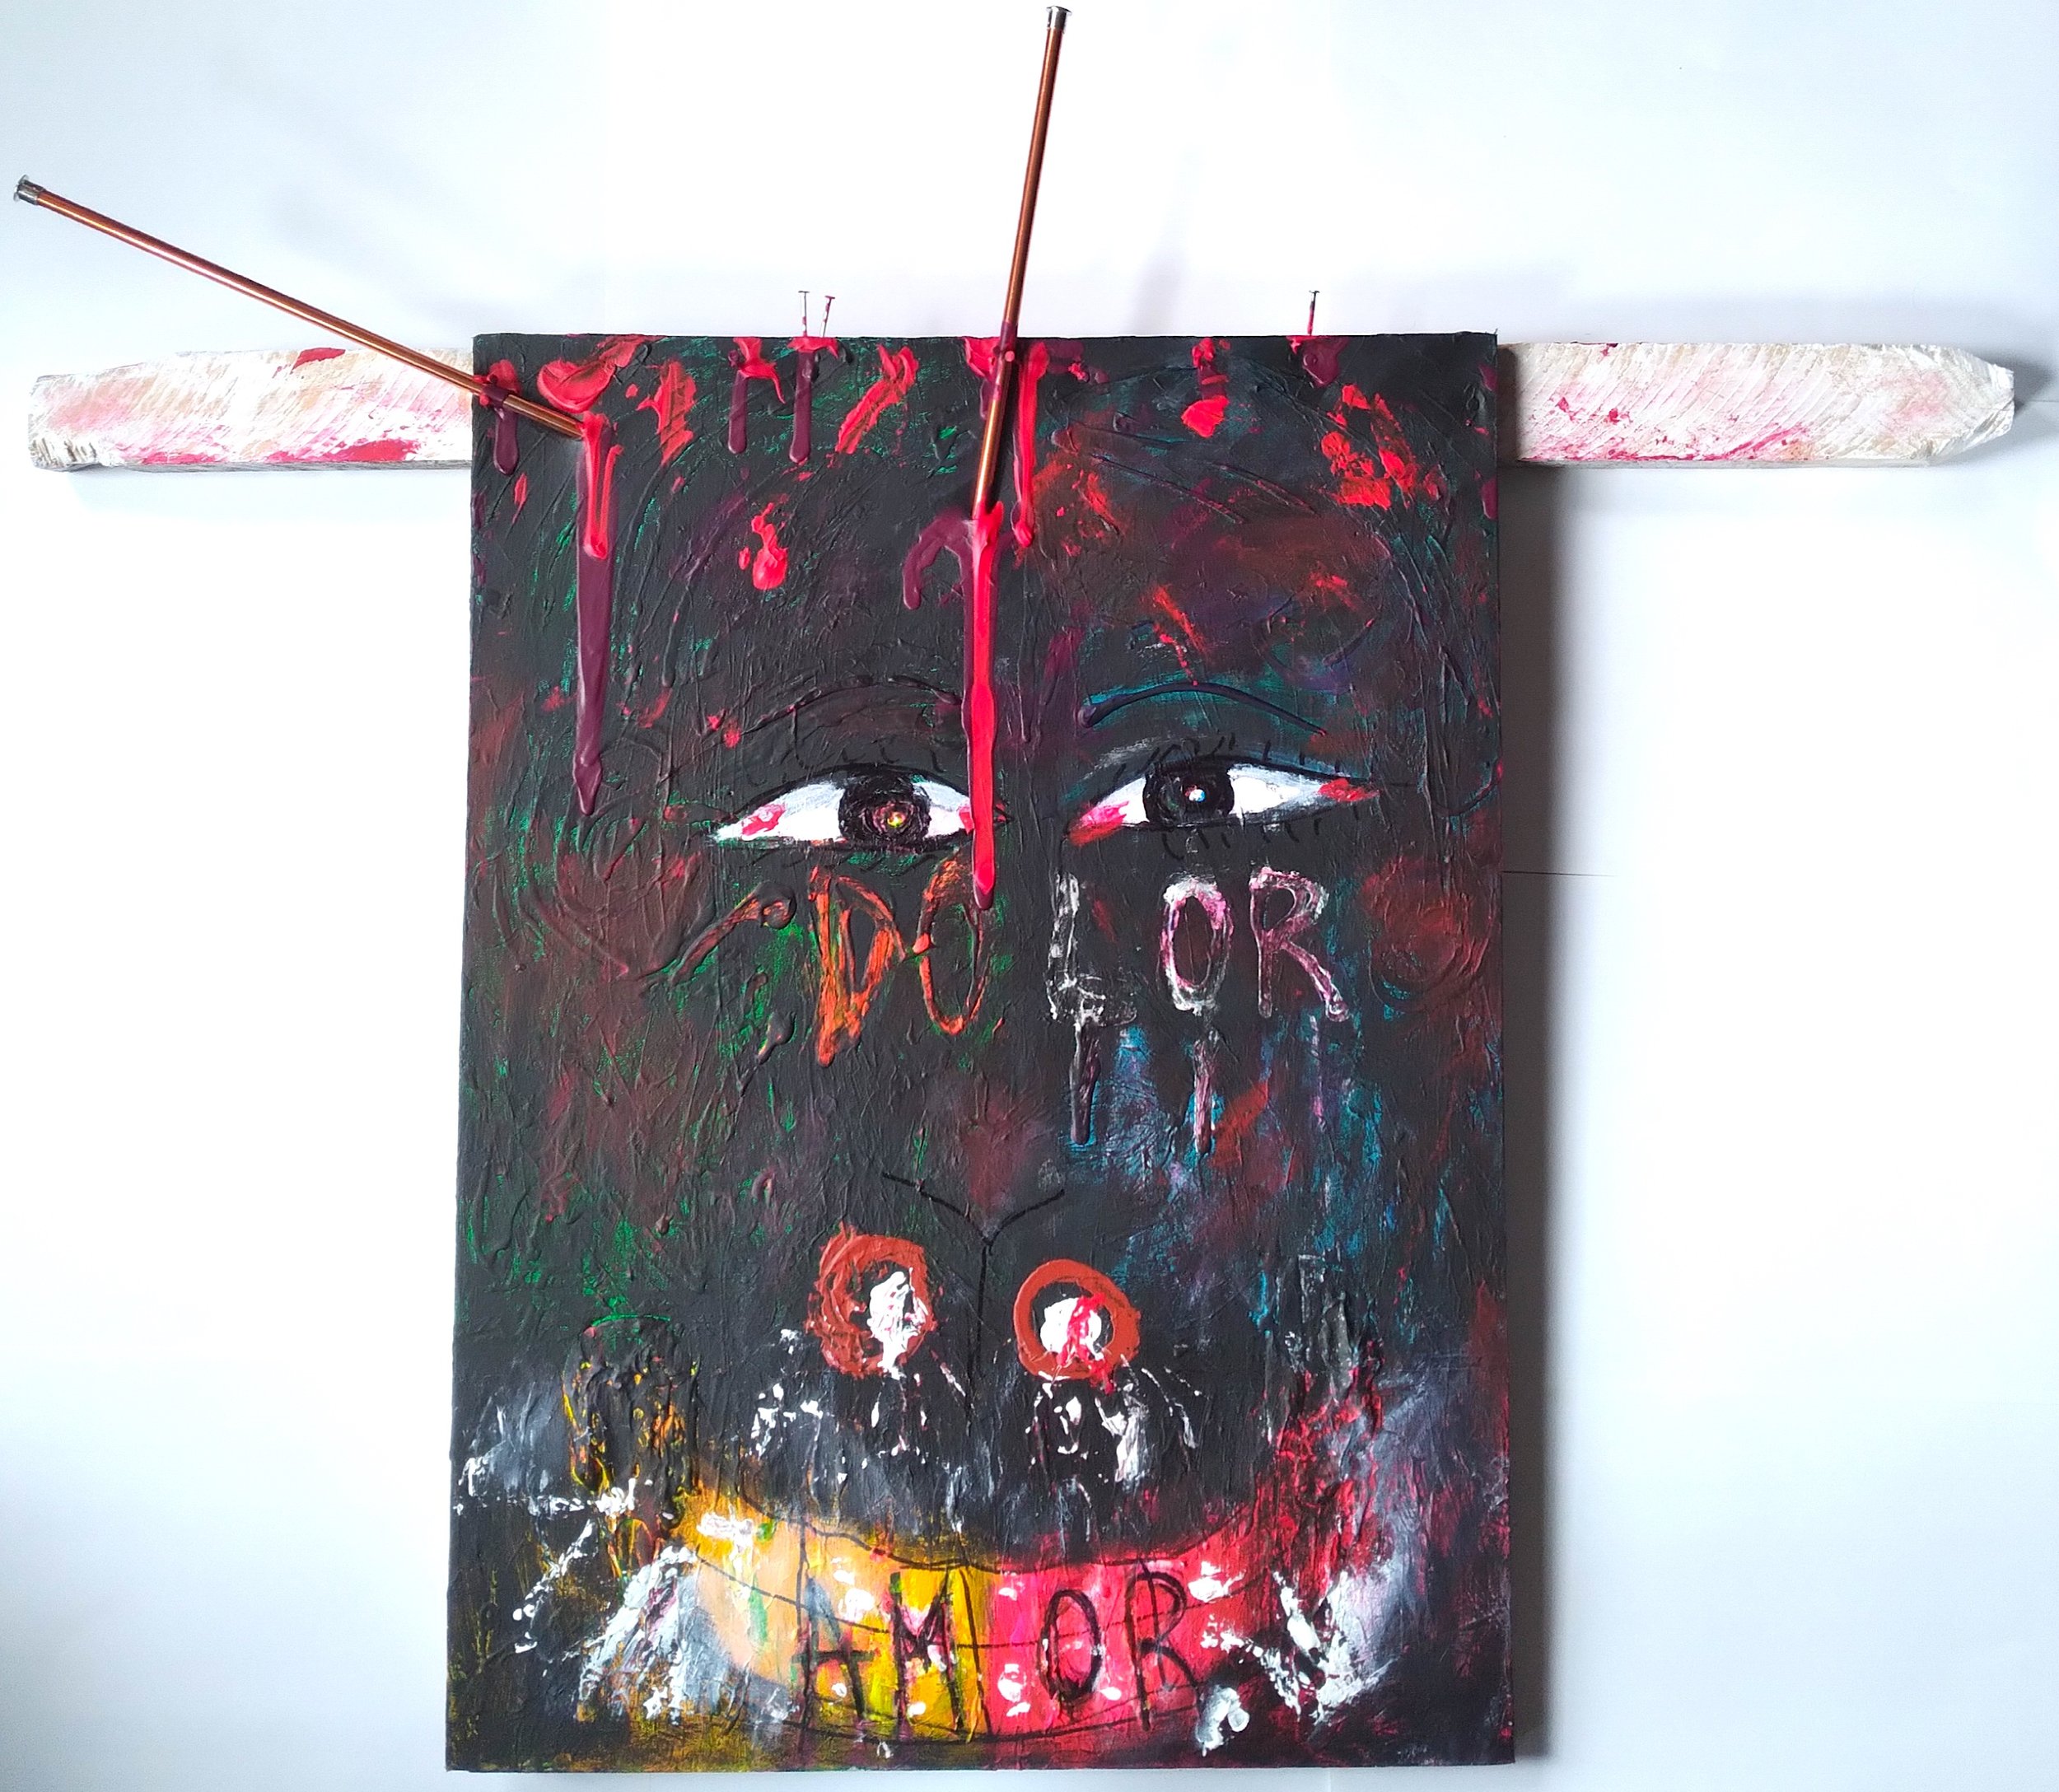 Raging Bull, 2014. Oil, acrylic, wood on canvas. 32” x 42”.